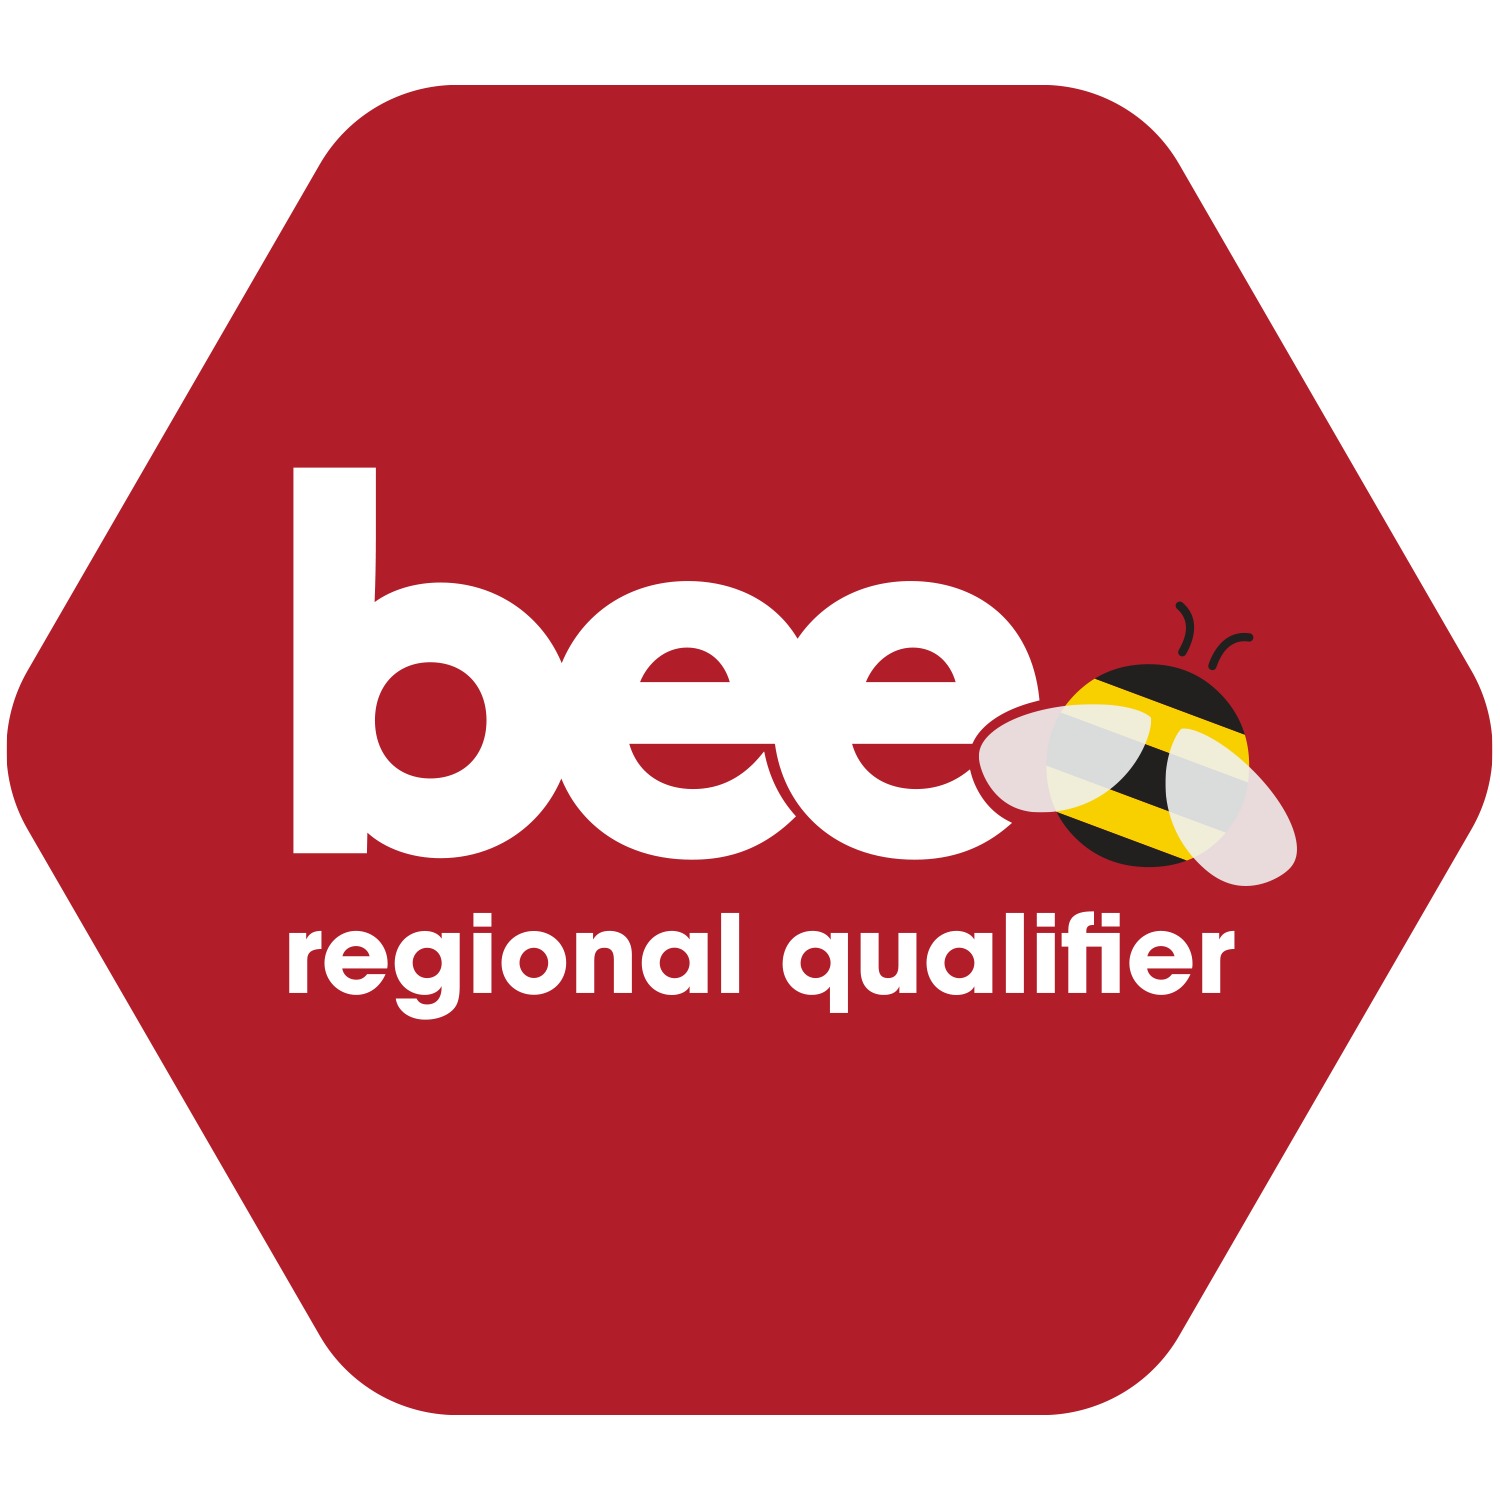 Scripps National Spelling Bee regional qualifier level logo